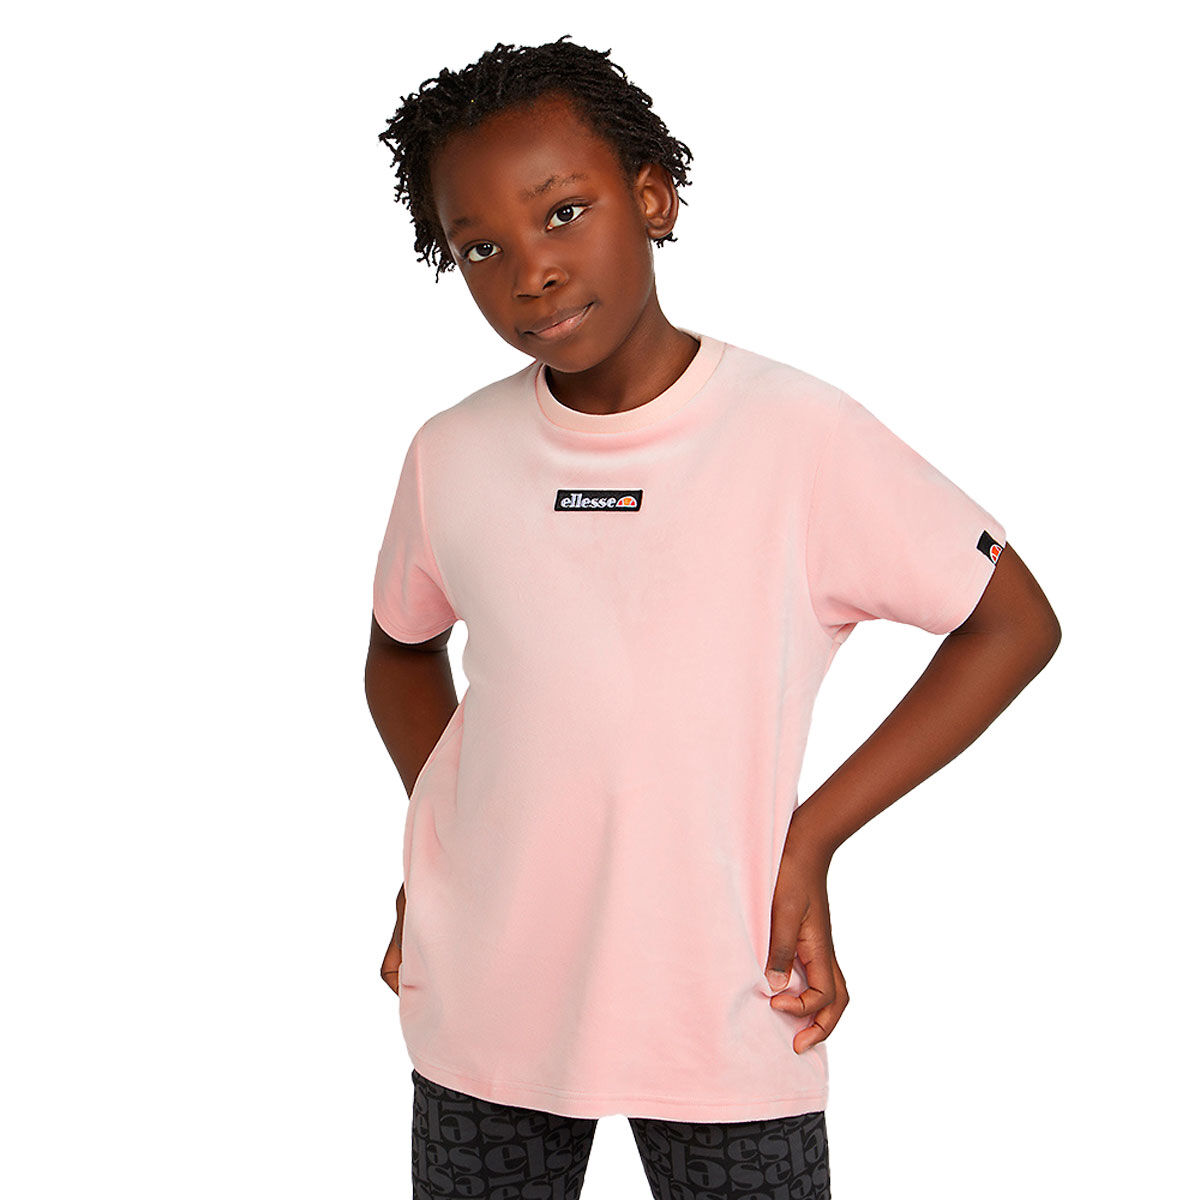 Lids Detroit Tigers New Era Girl's Youth Jersey Stars V-Neck T-Shirt - Pink